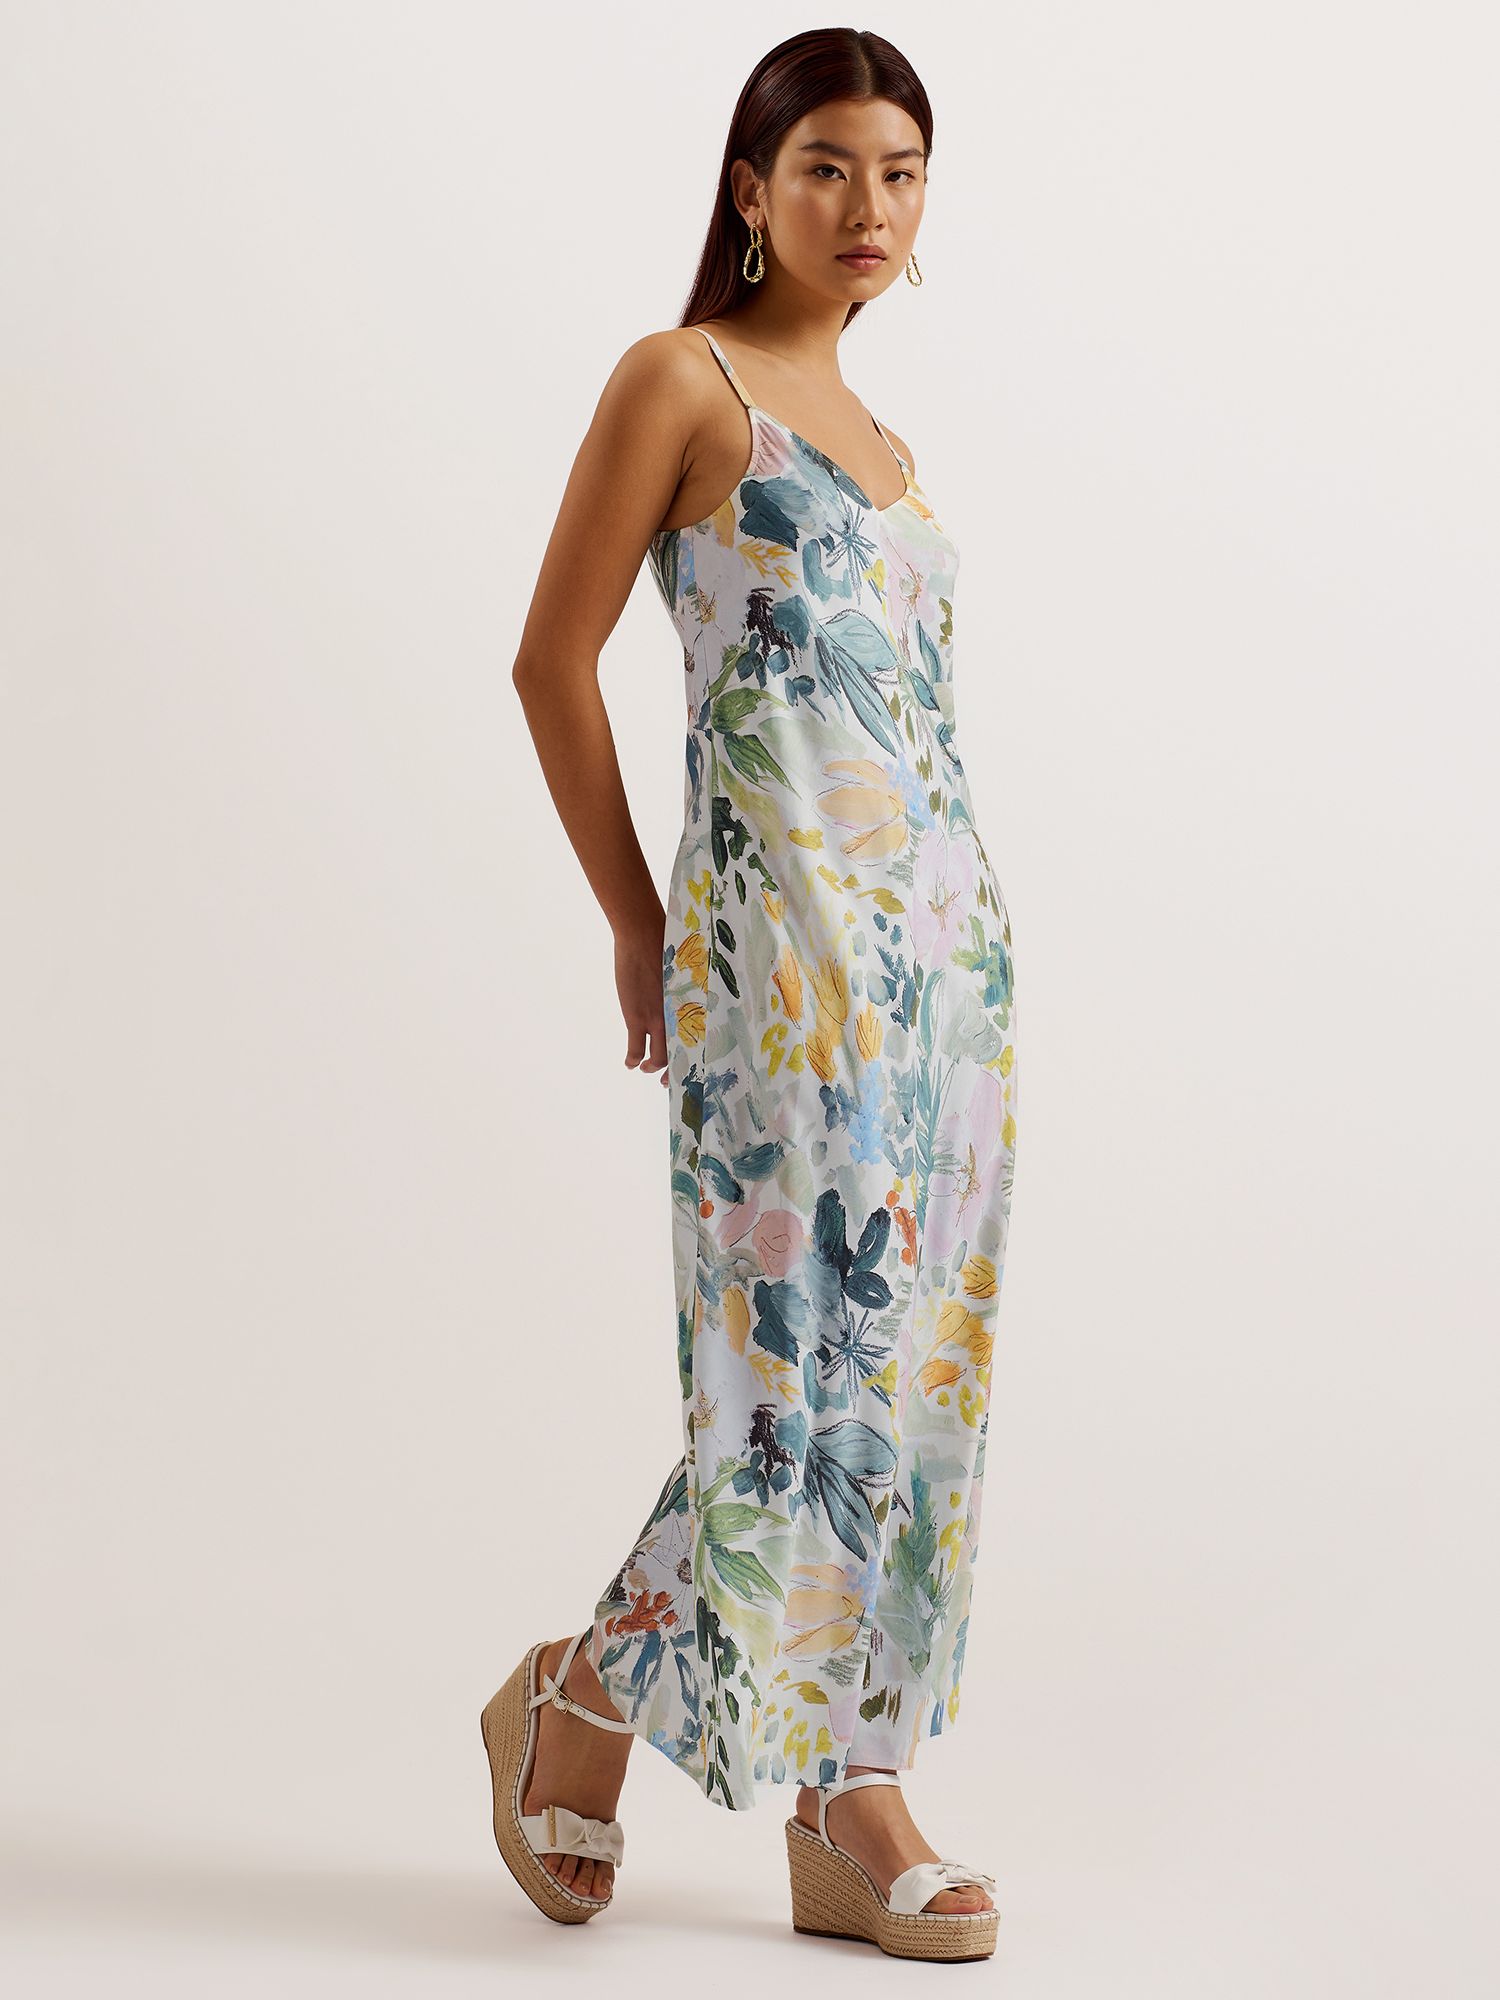 Ted Baker Adamela Abstract Print Sleeveless Maxi Dress, Natural Ivory/Multi, 14